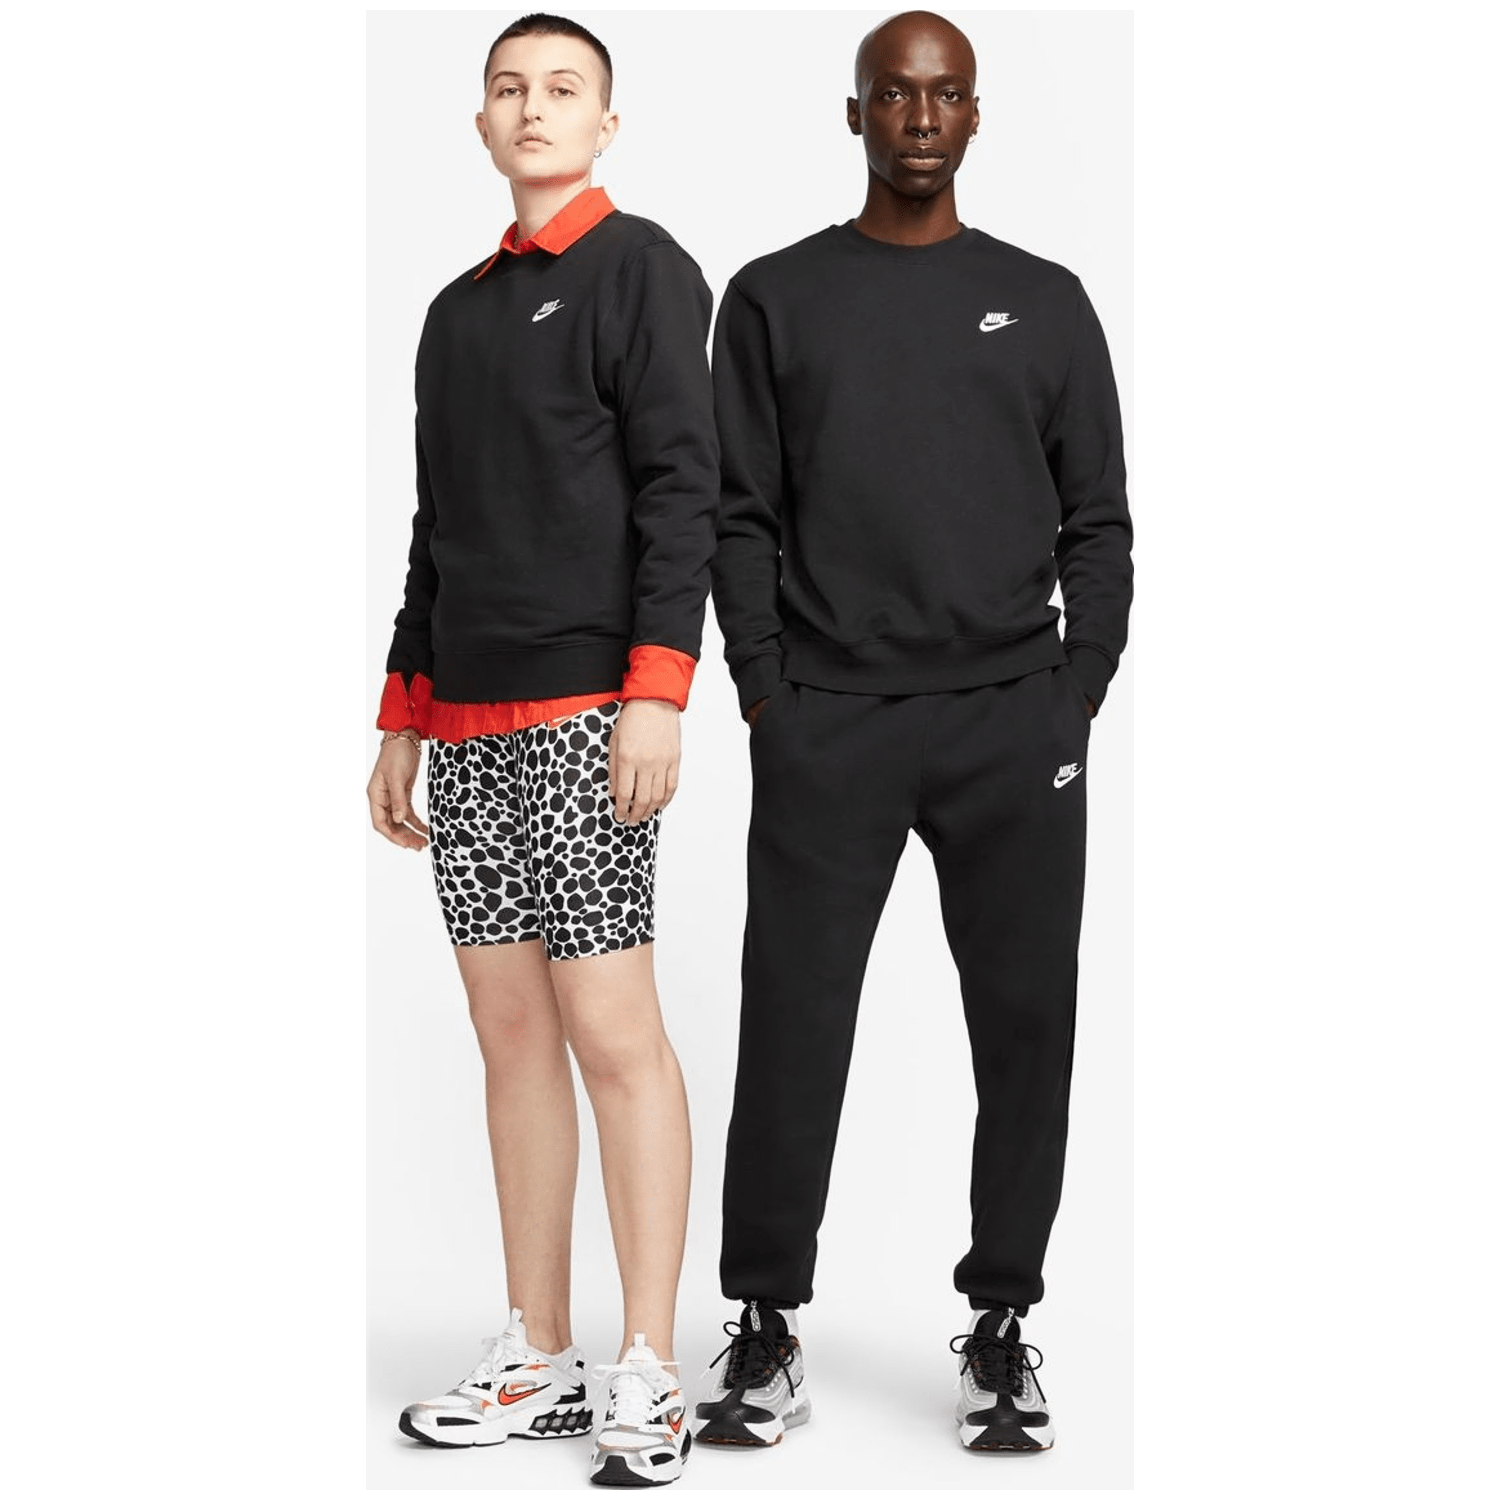 Nike Sportswear Club Crew Herren Sweatshirt